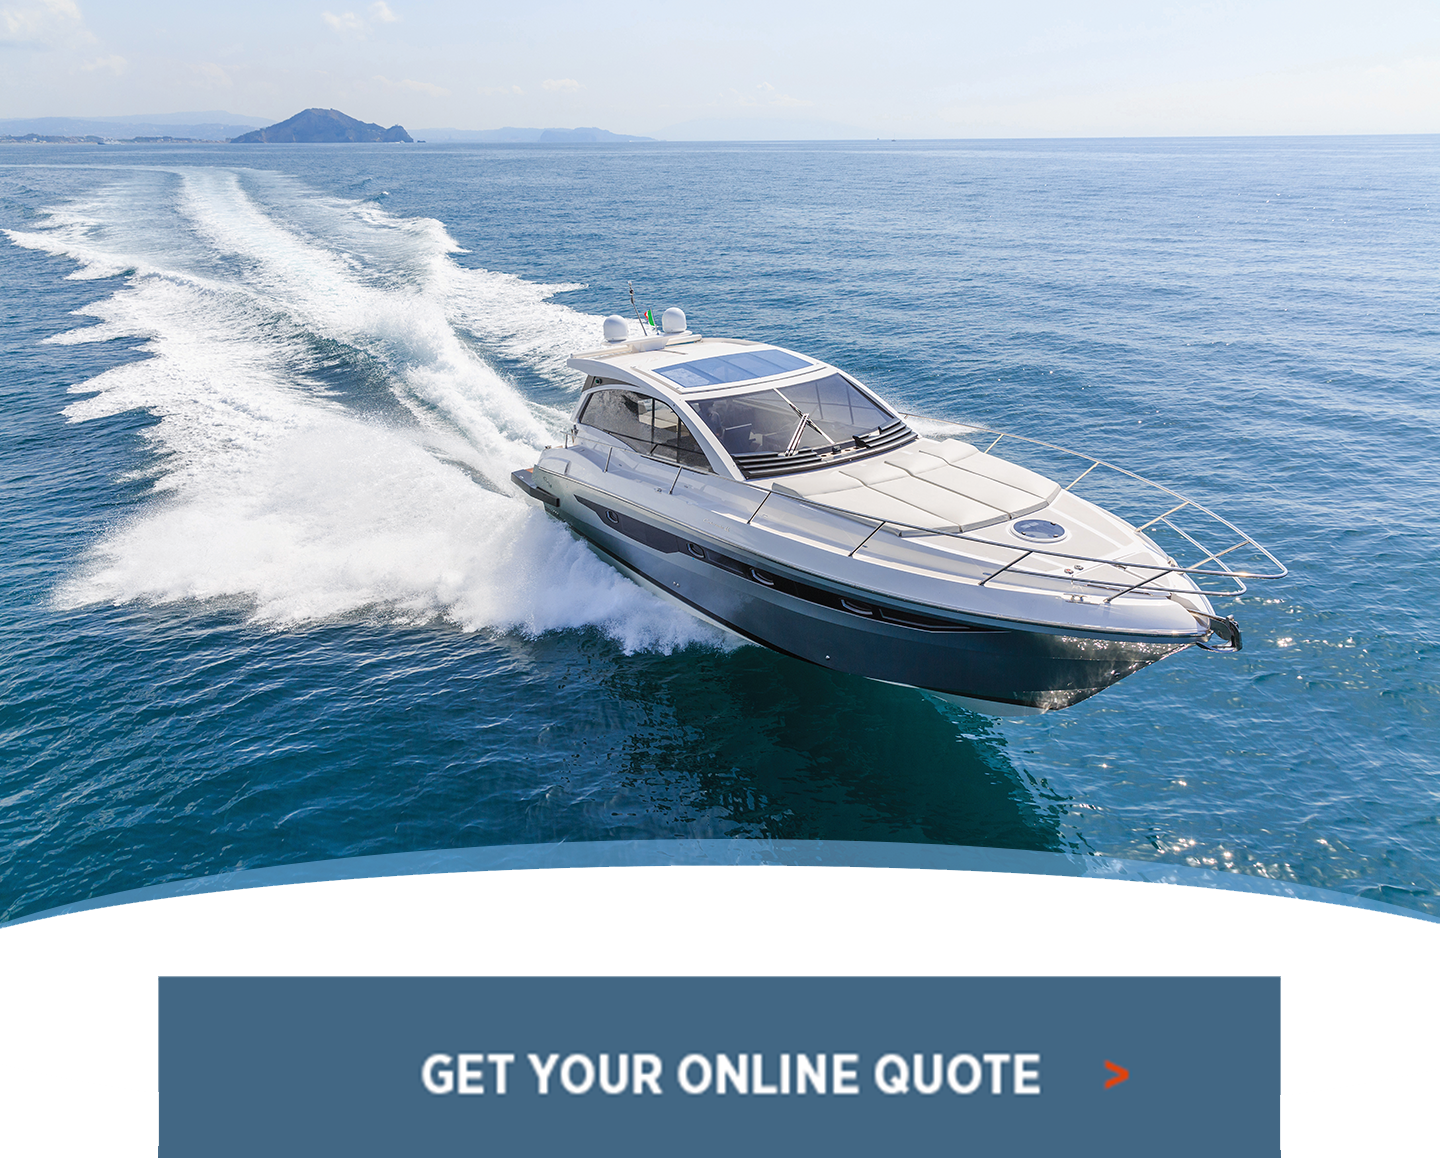 boat insurance ontario skippers’ plan marine insurance